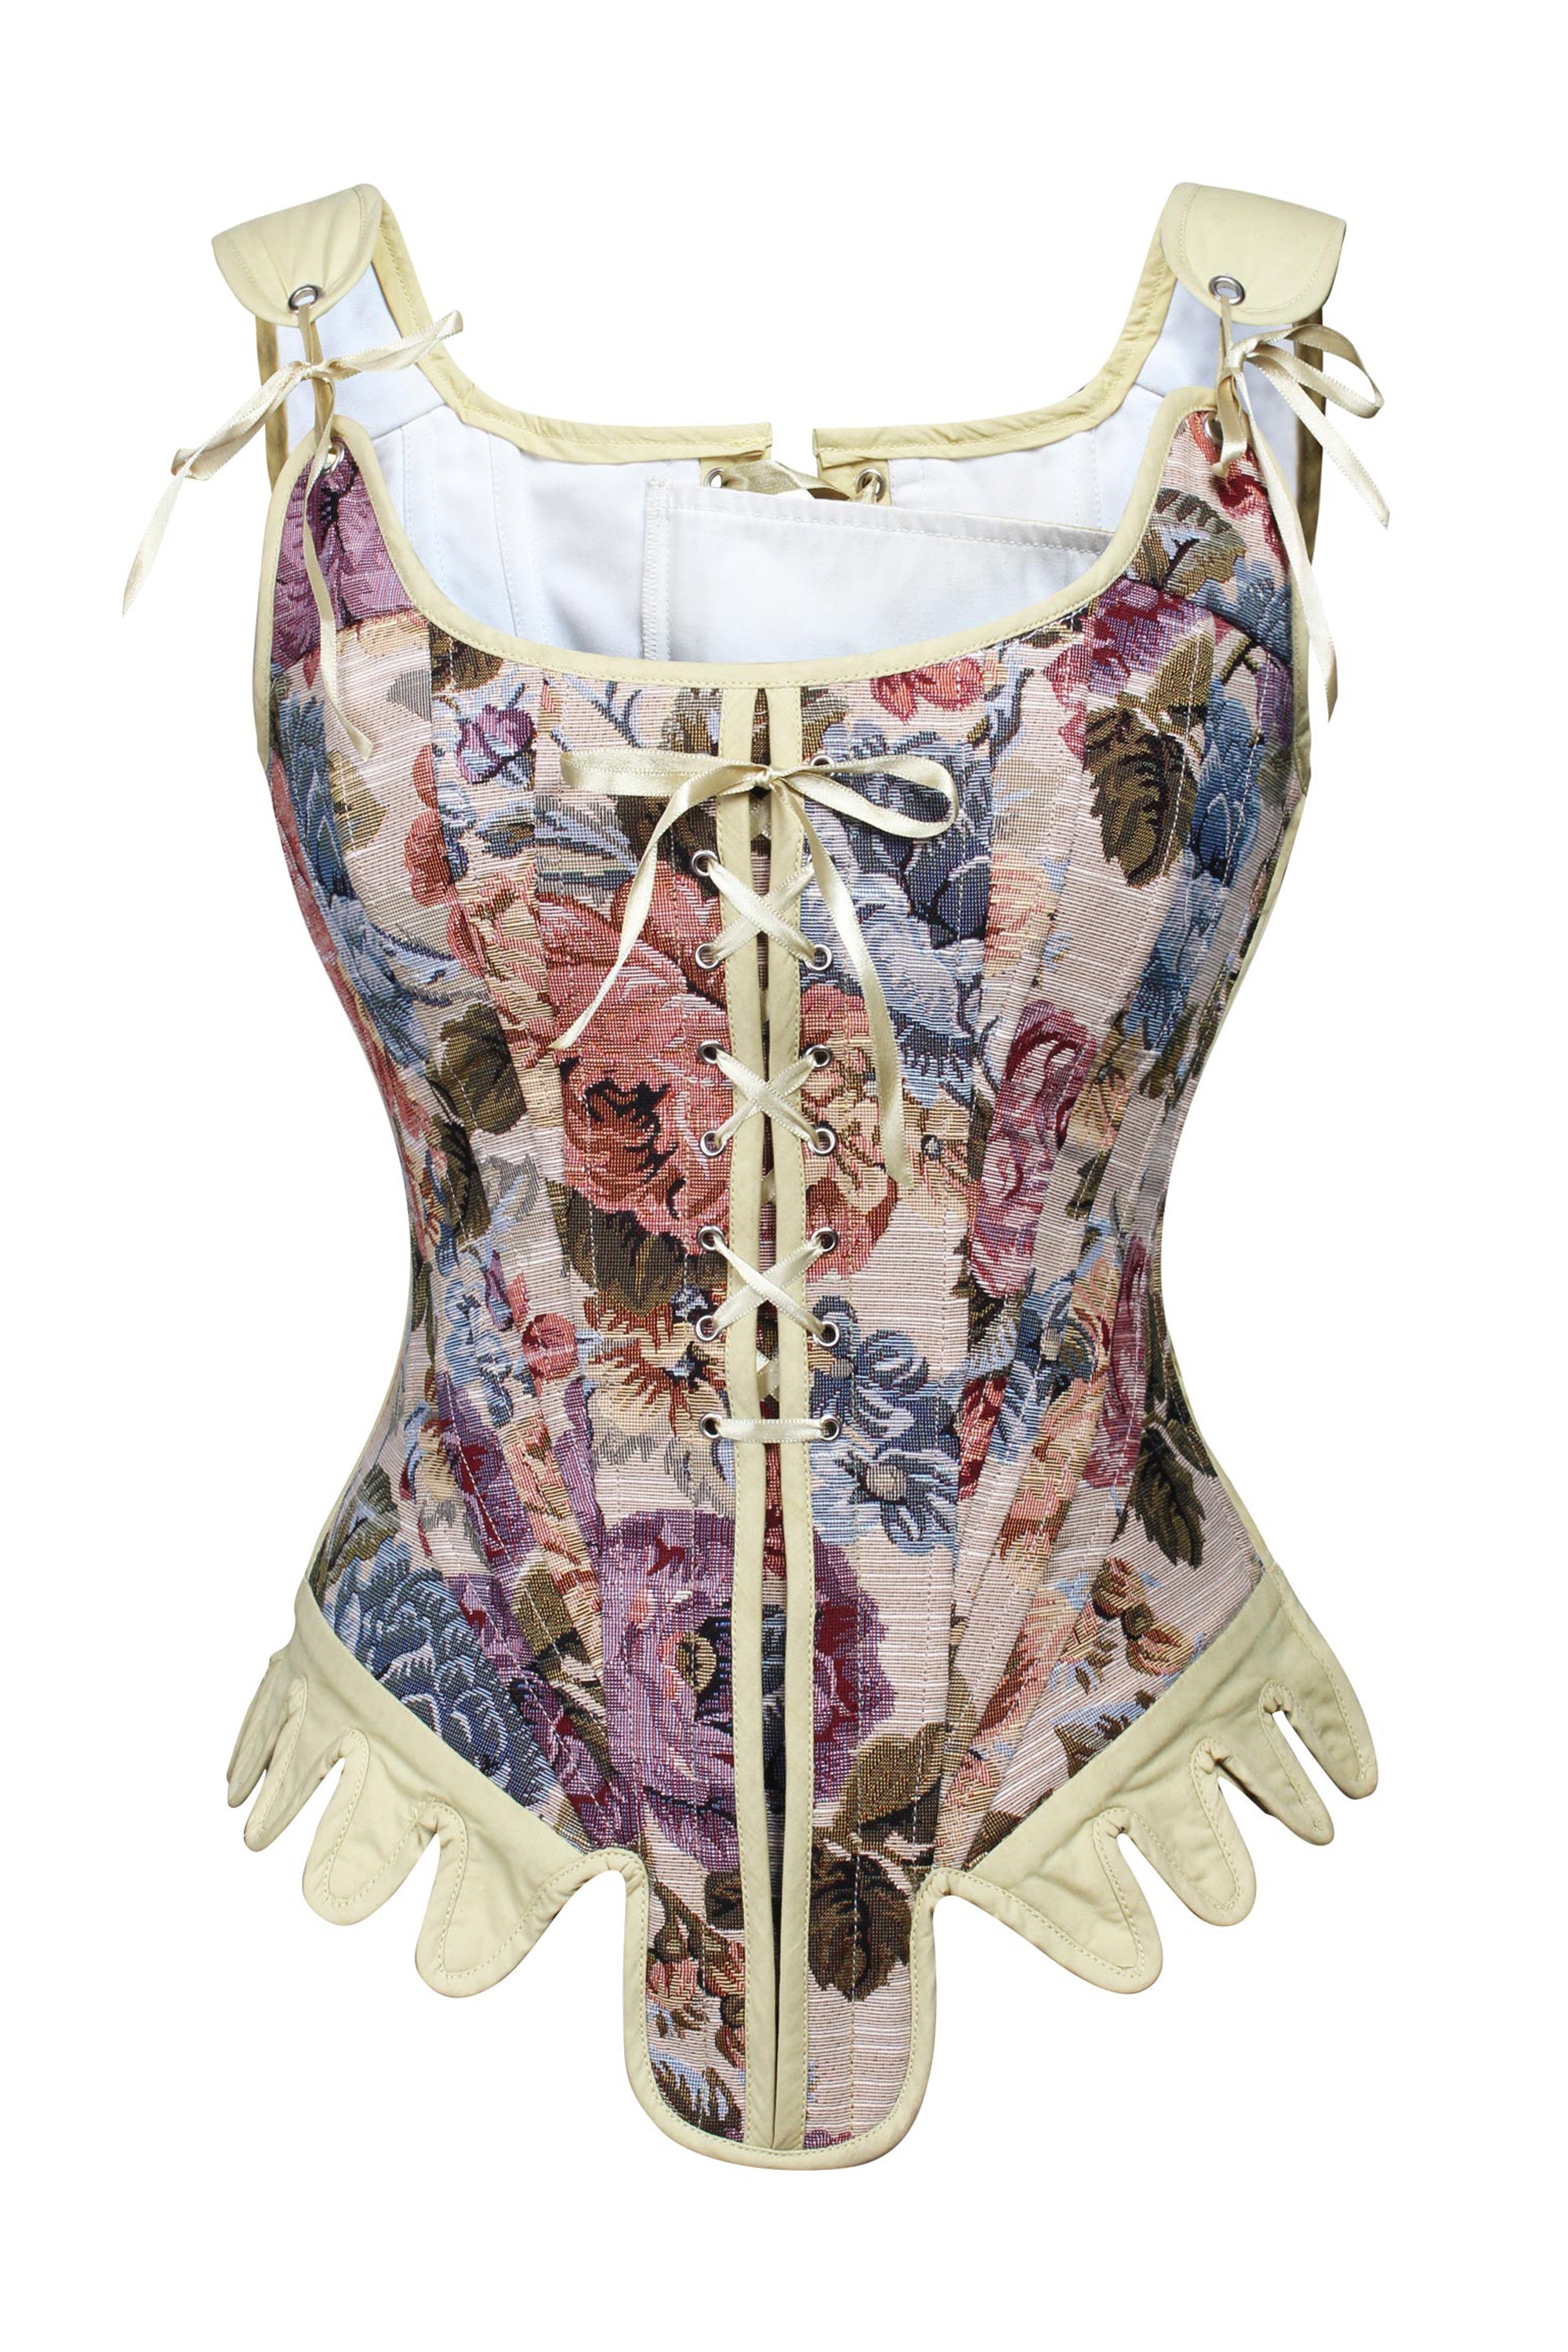 Bone up! How the corset became a symbol of emancipation